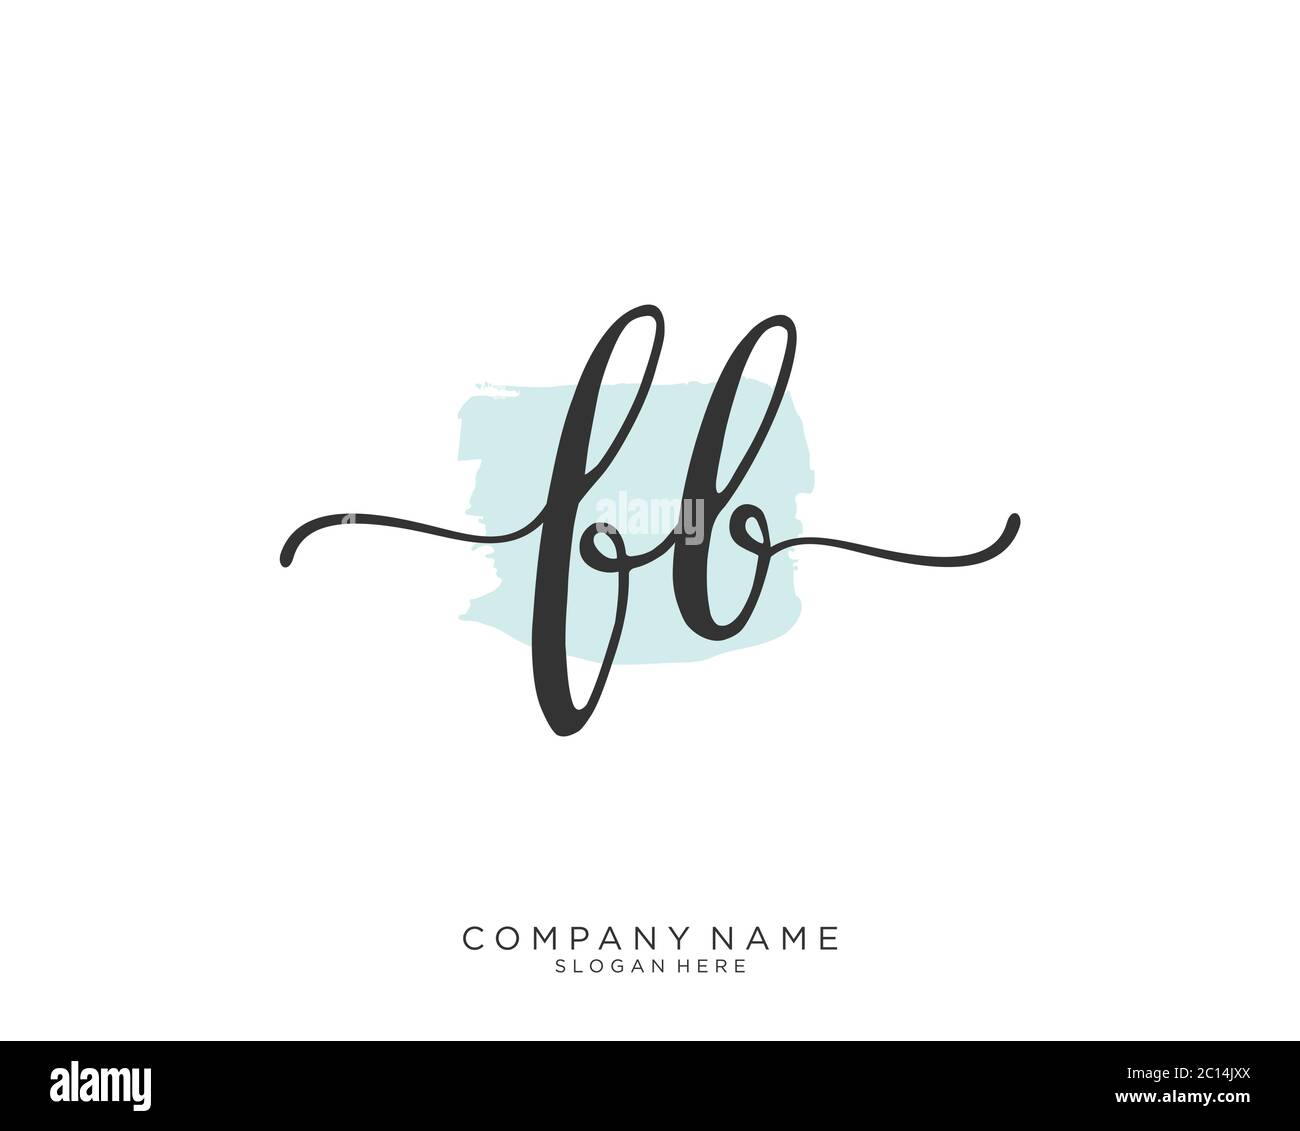 FB Initial handwriting logo vector Stock Vector